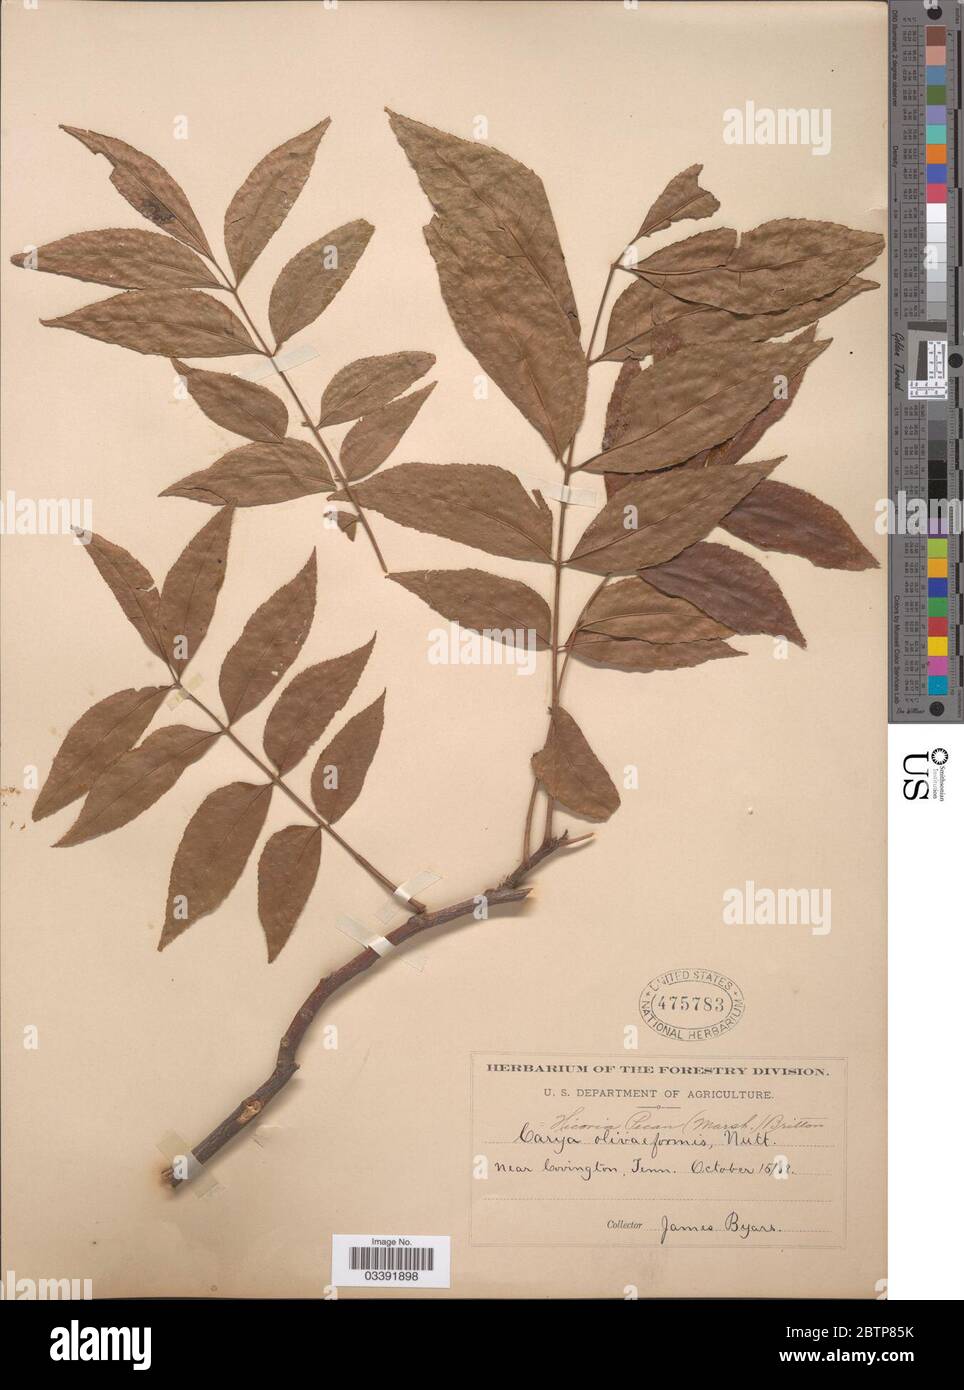 Carya illinoensis Wangenh K Koch. Stock Photo